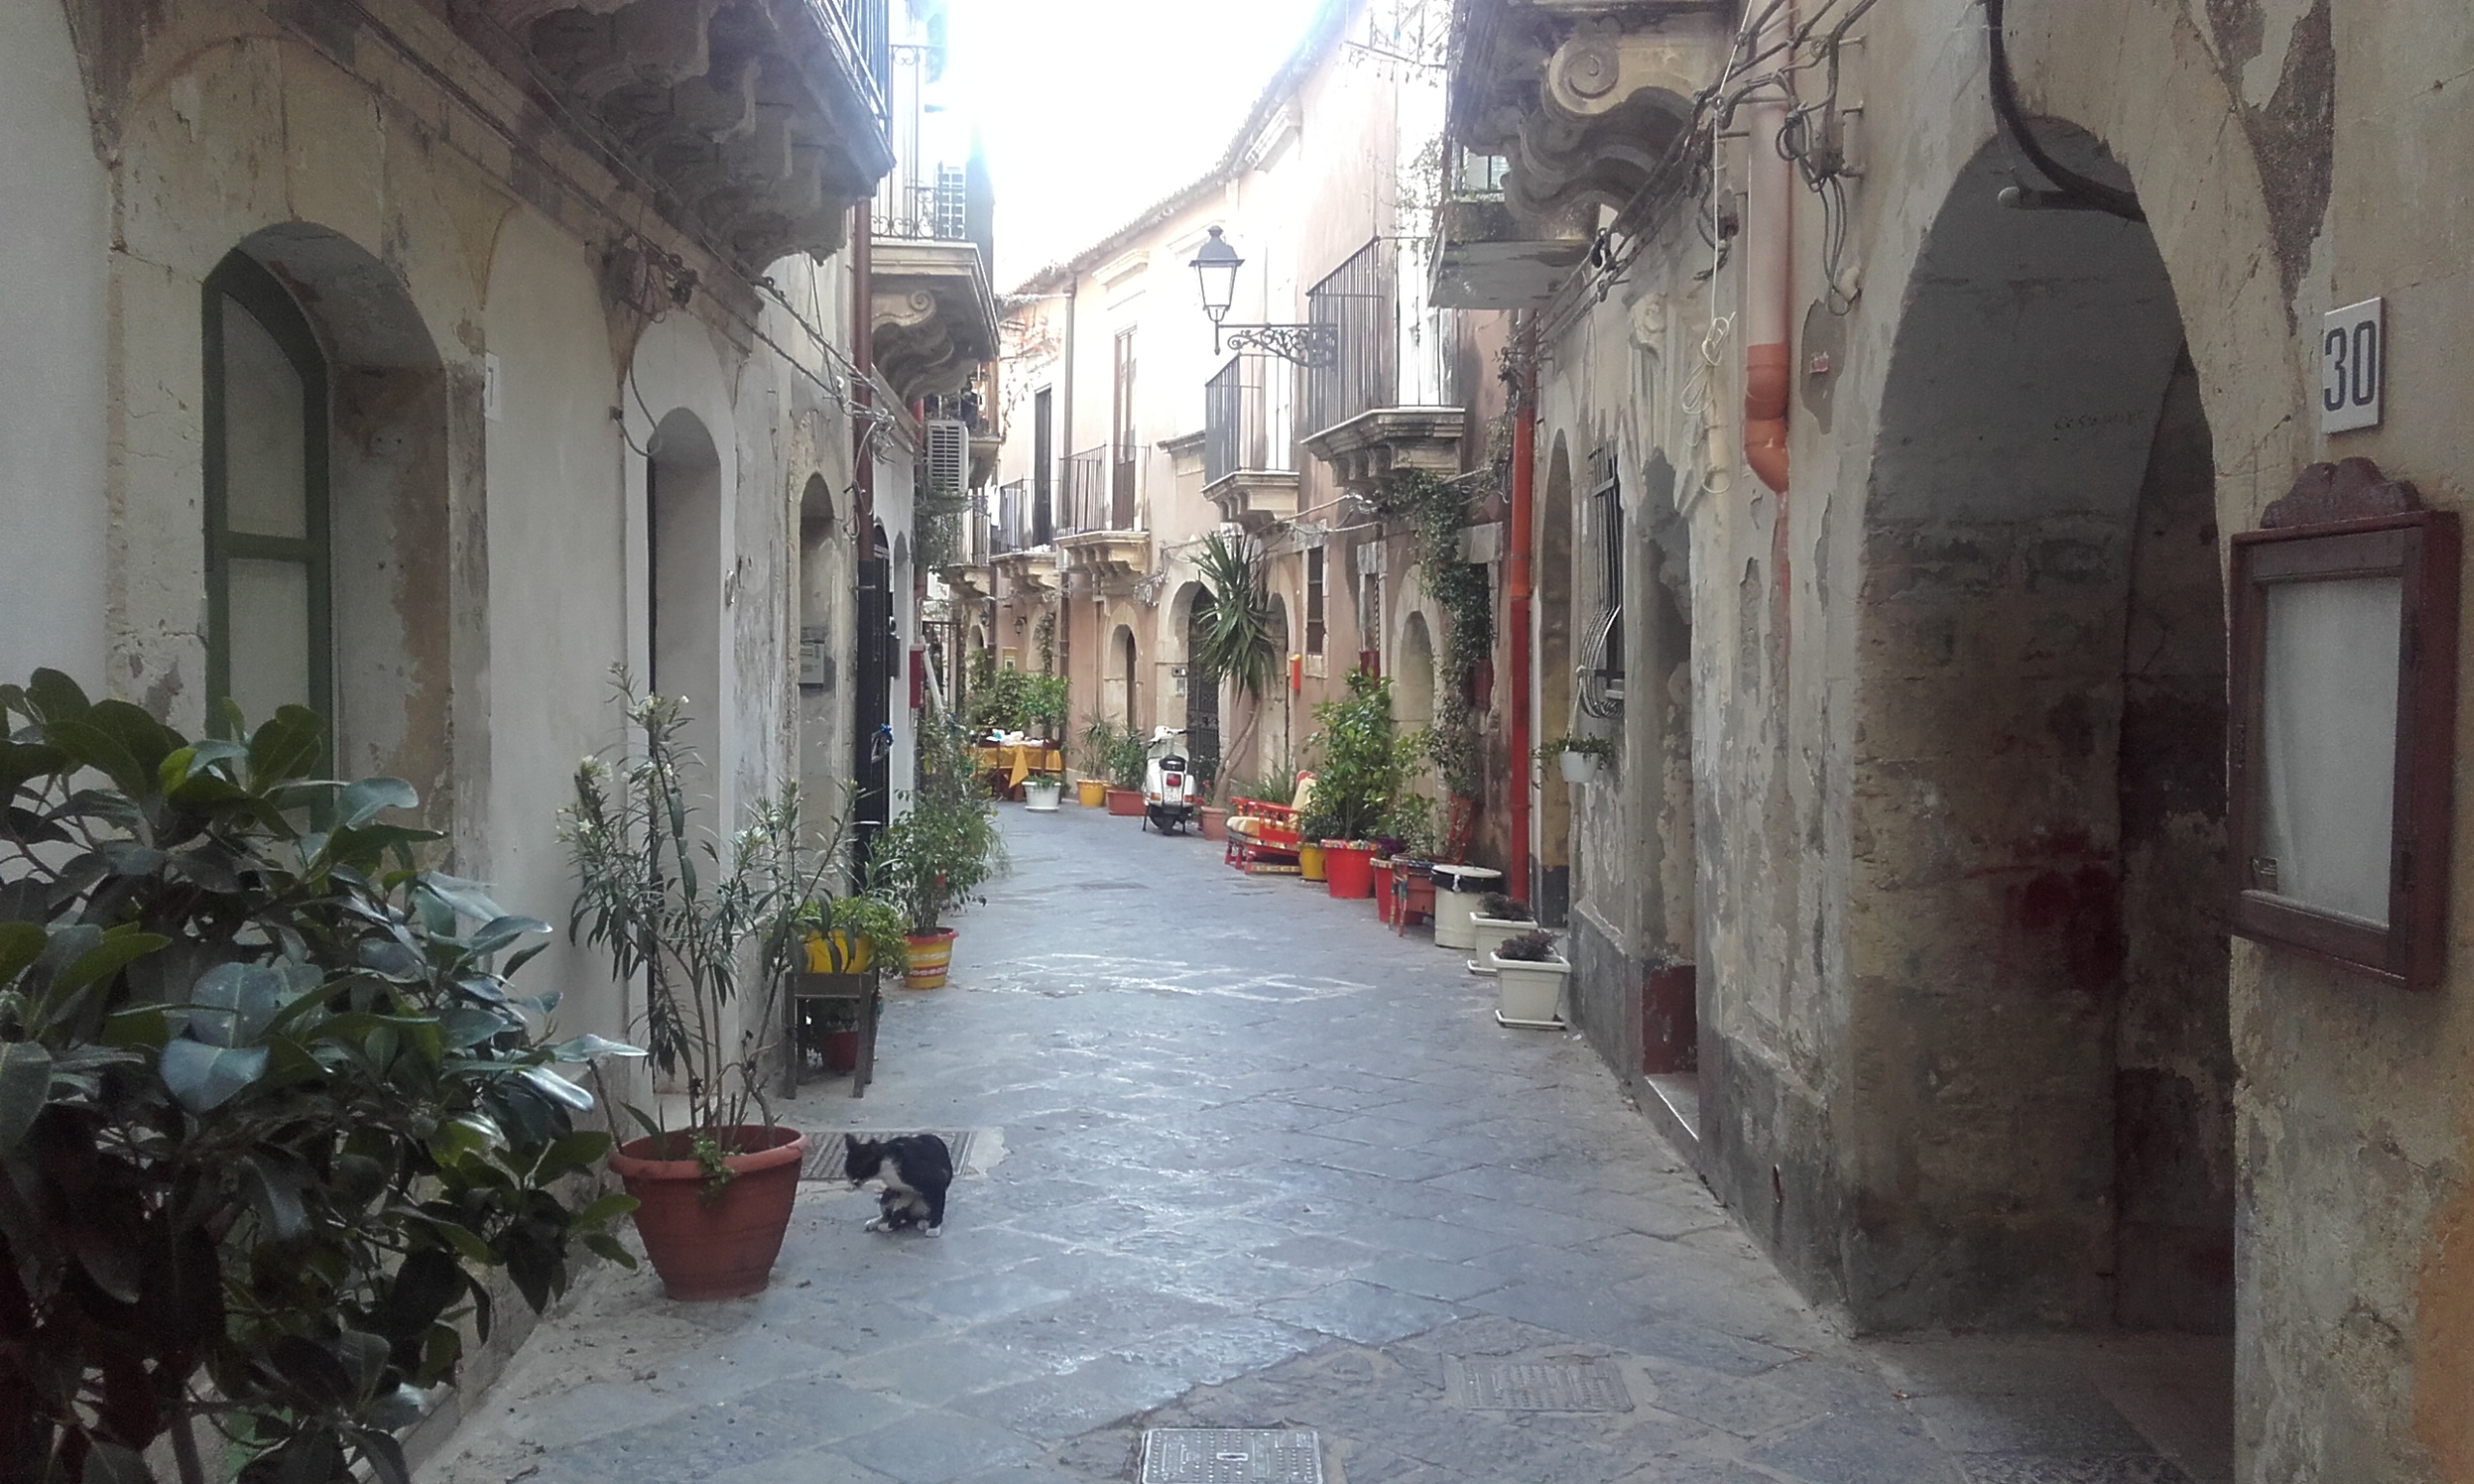 Paseando por las callejuelas de Ortigia